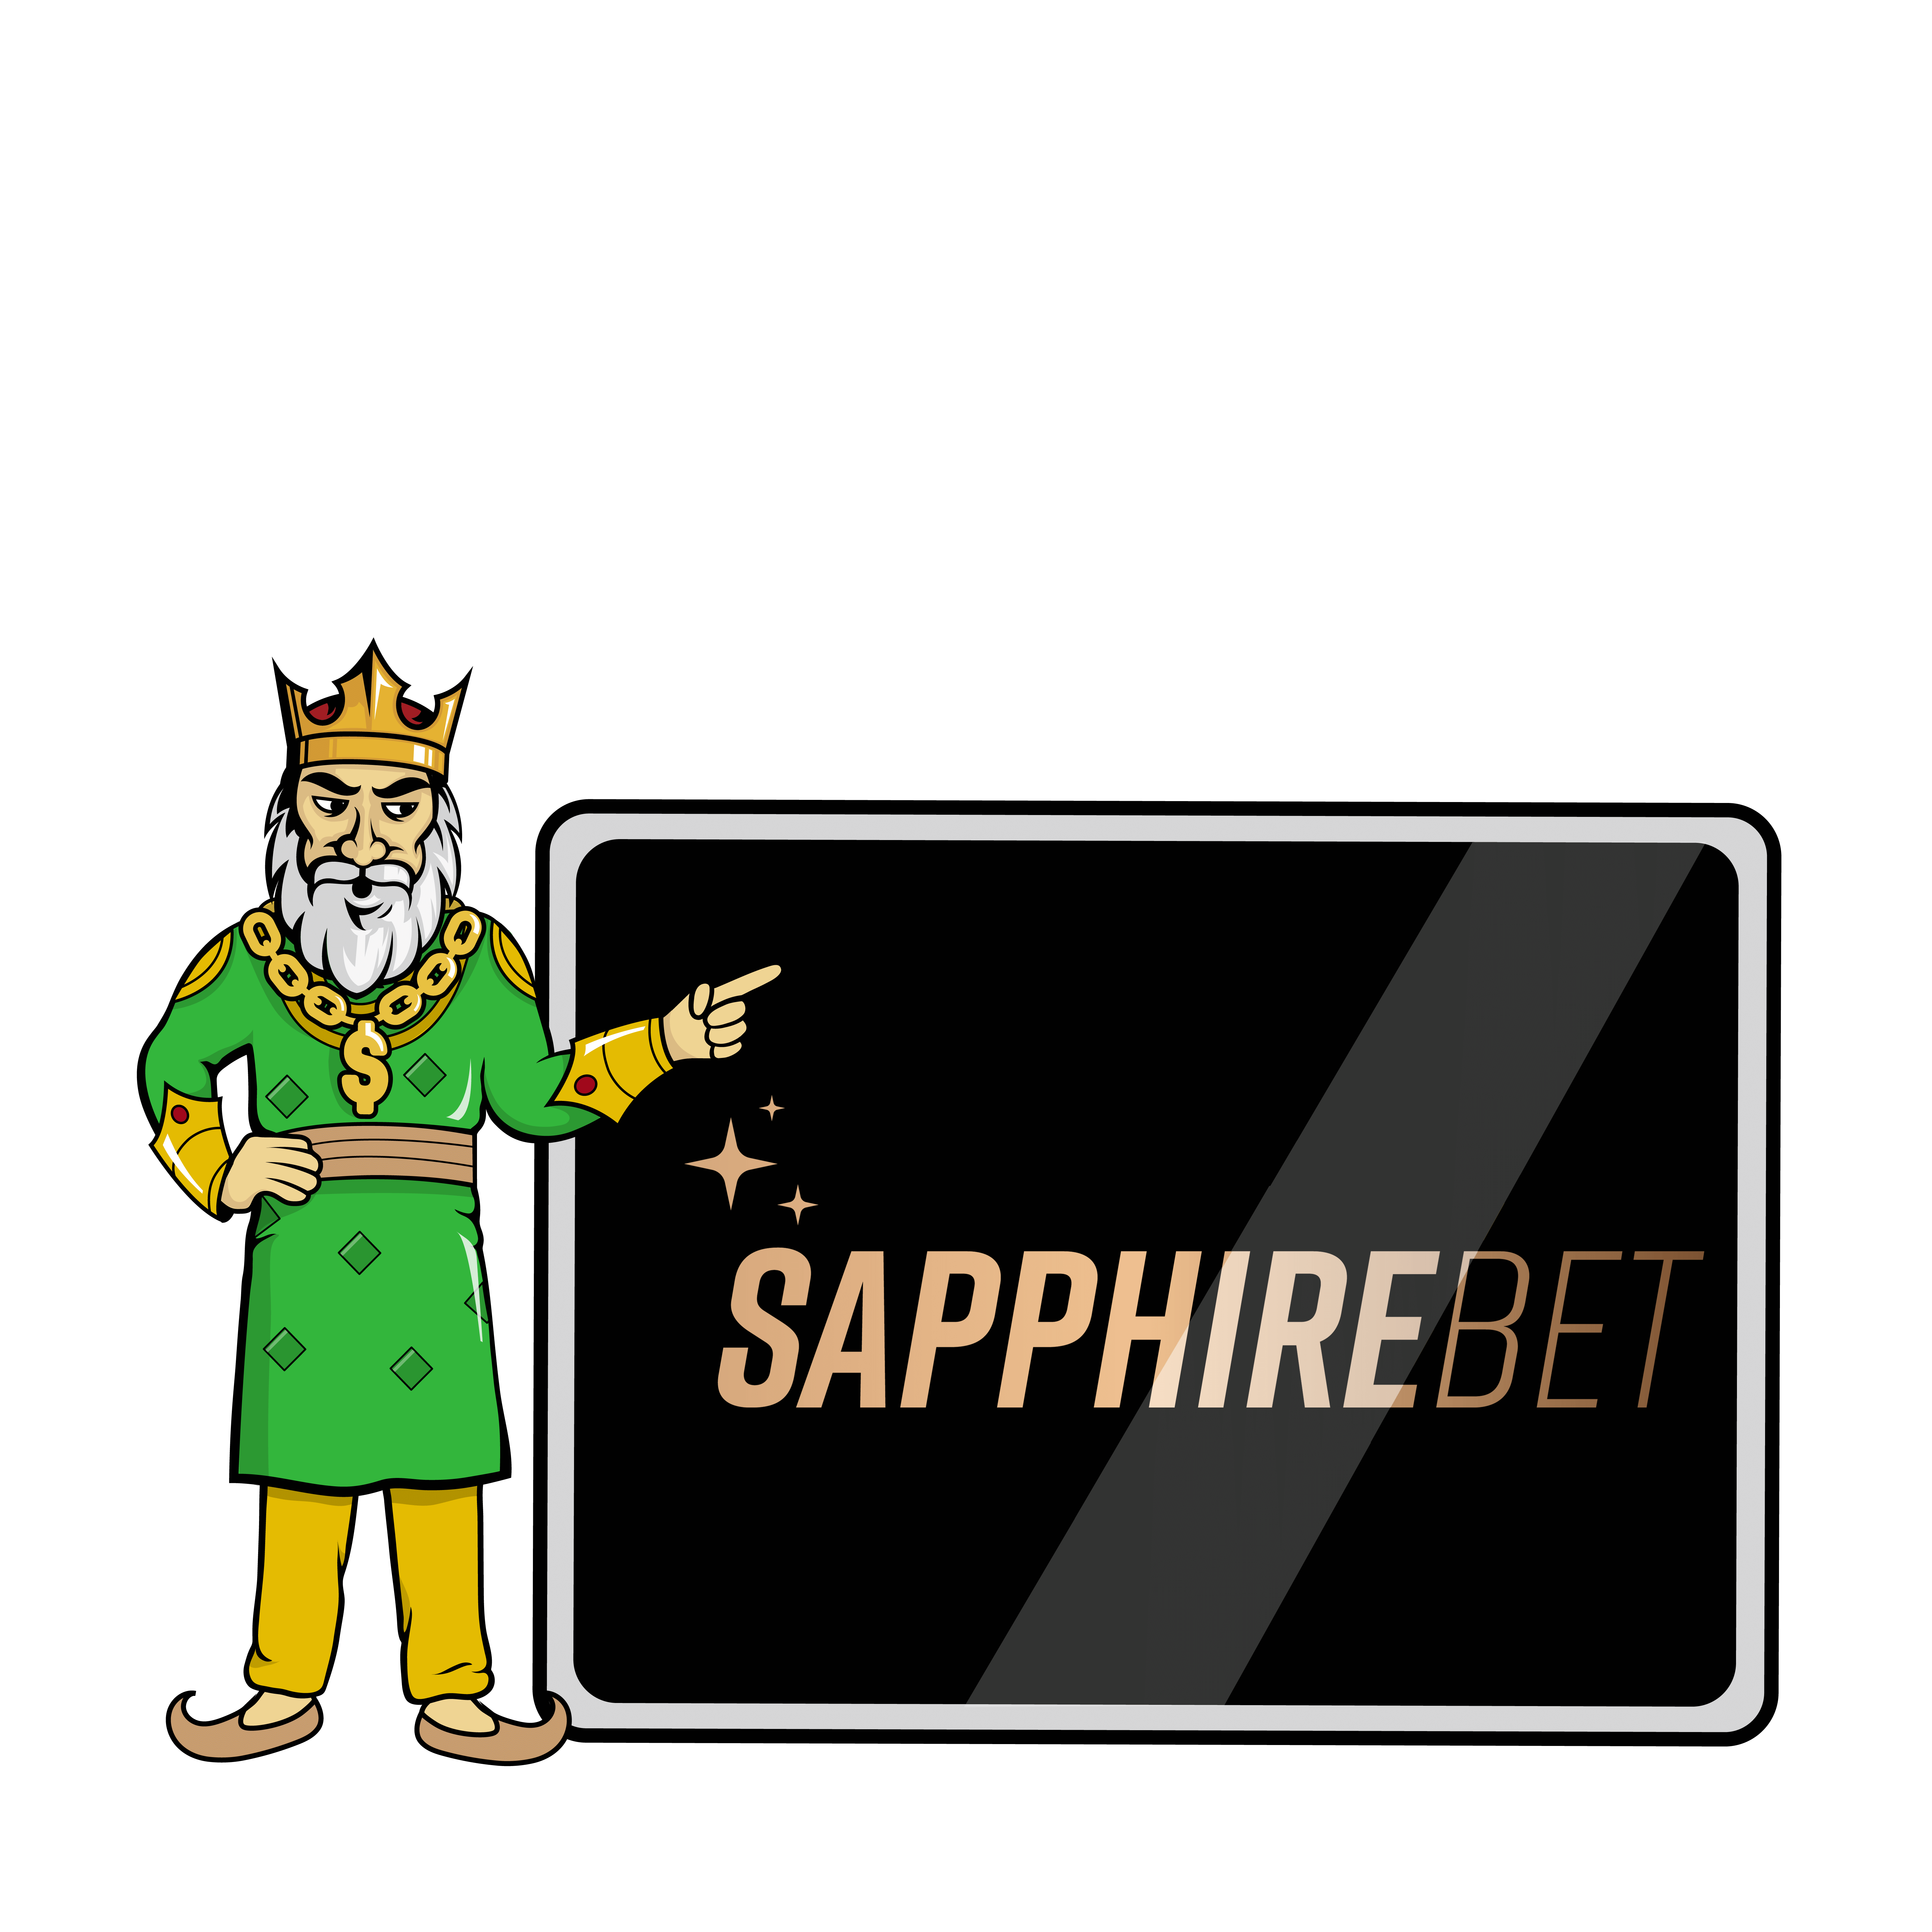 Betraj's honest review of SapphireBet in India